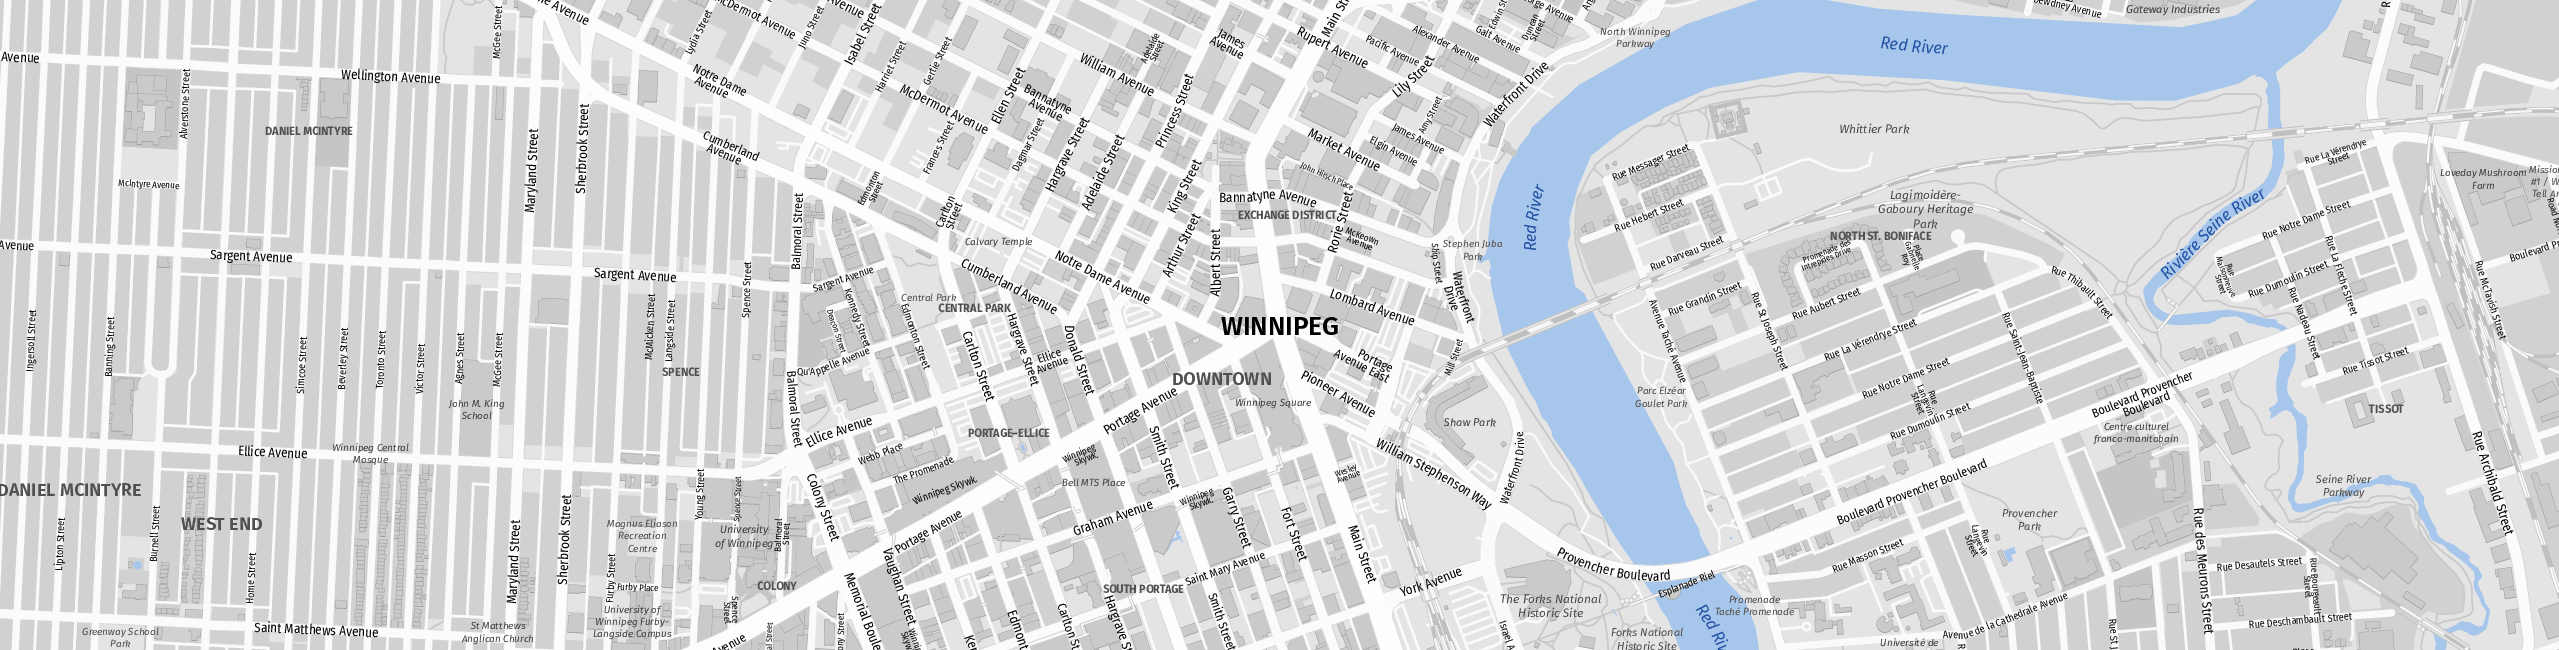 Stadtplan Winnipeg zum Downloaden.